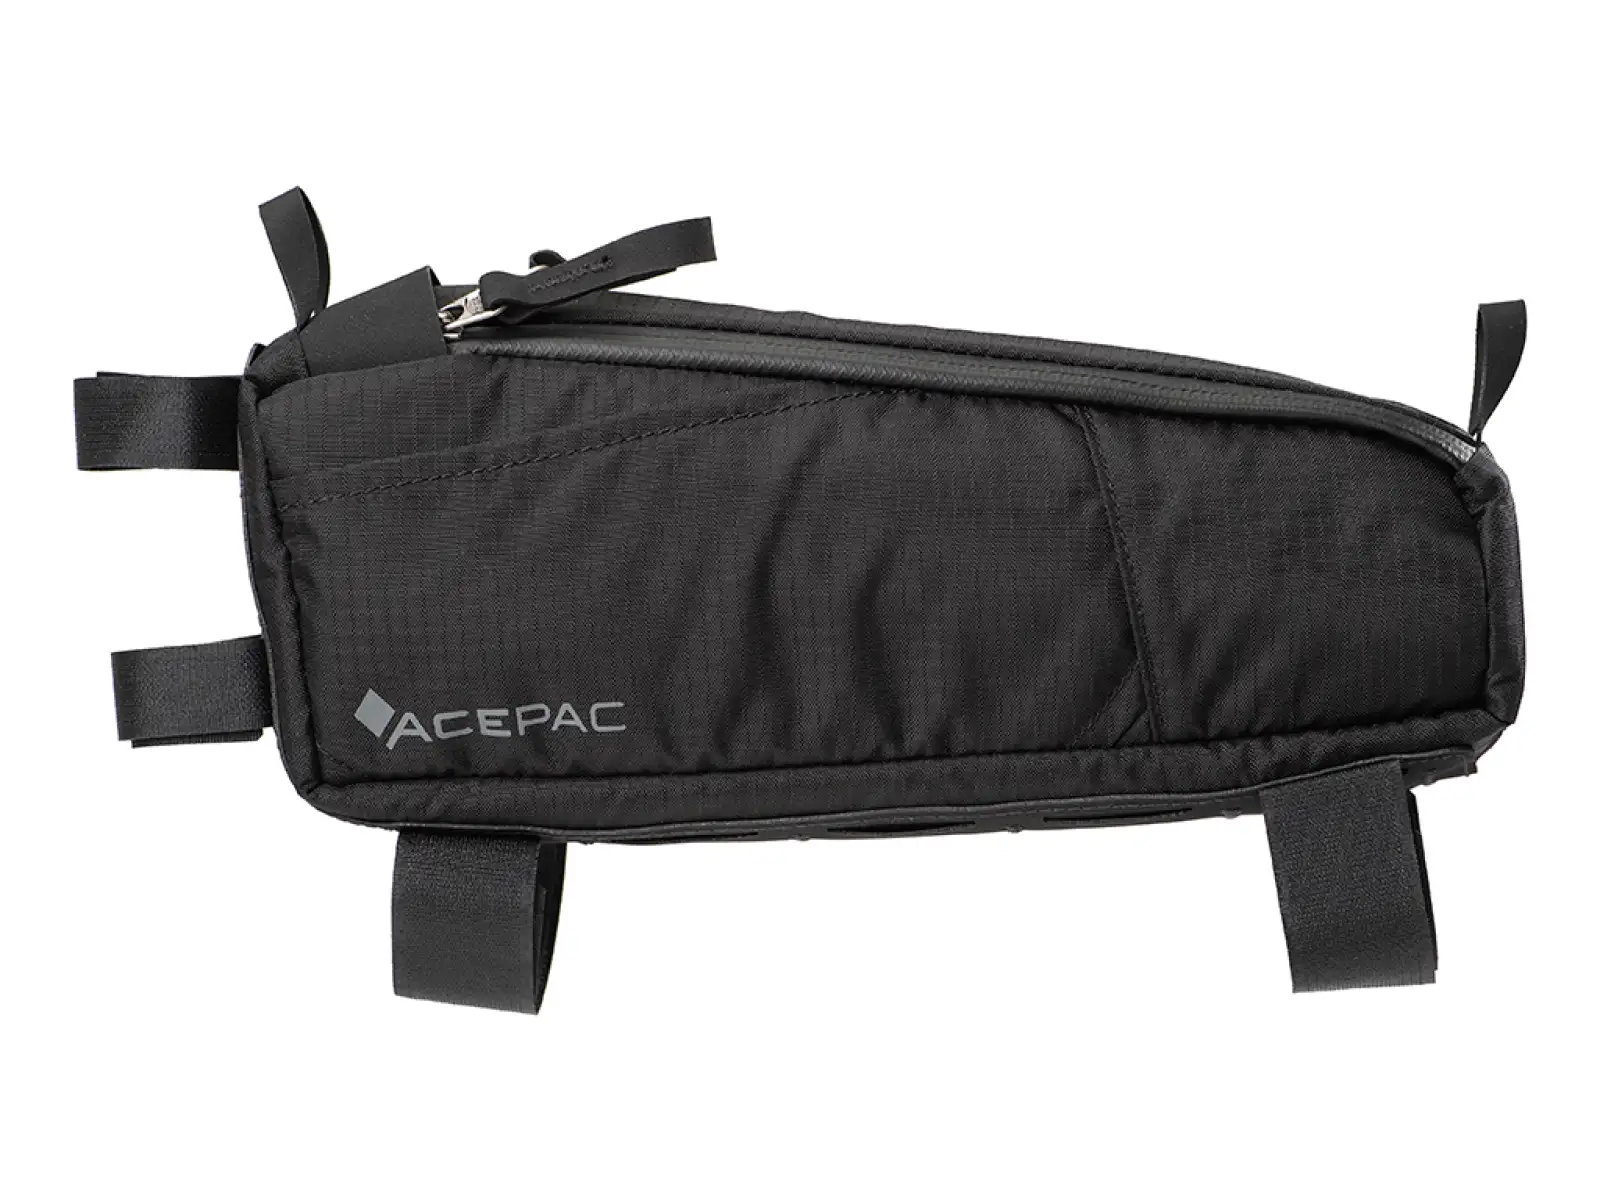 Acepac Fuel Bag MKIII brašna 1,2 l Black